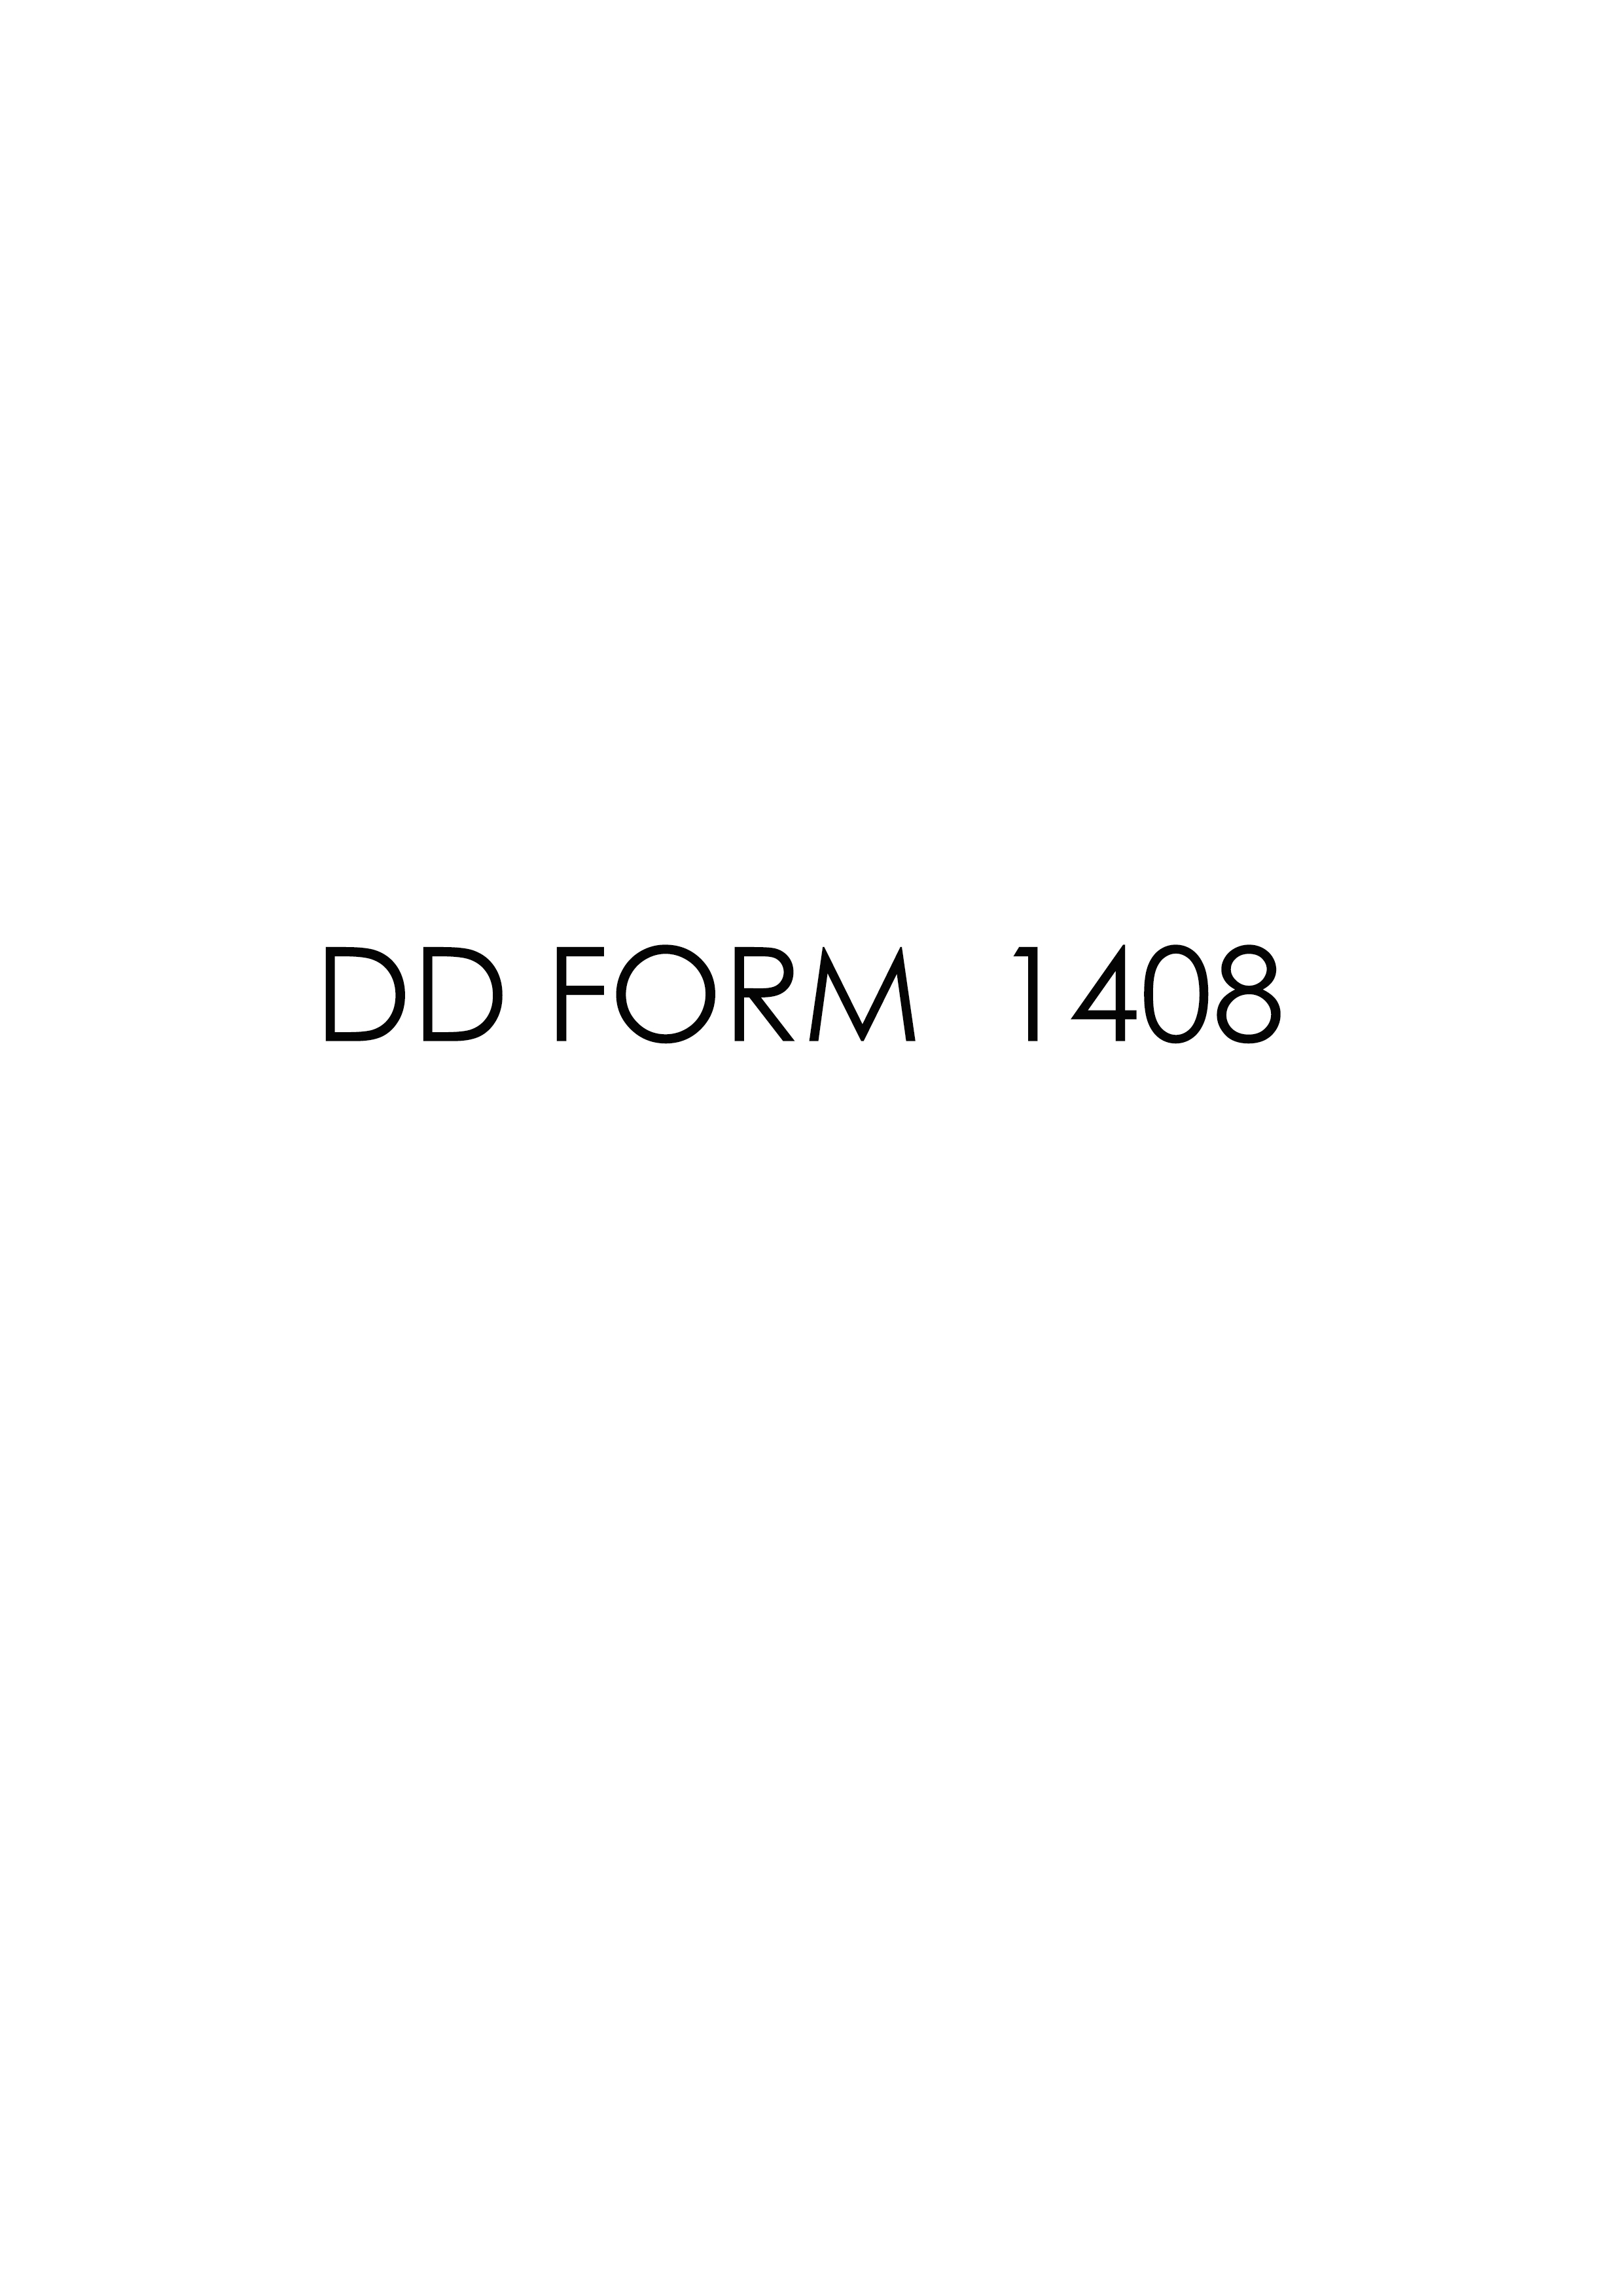 Download dd form 1408